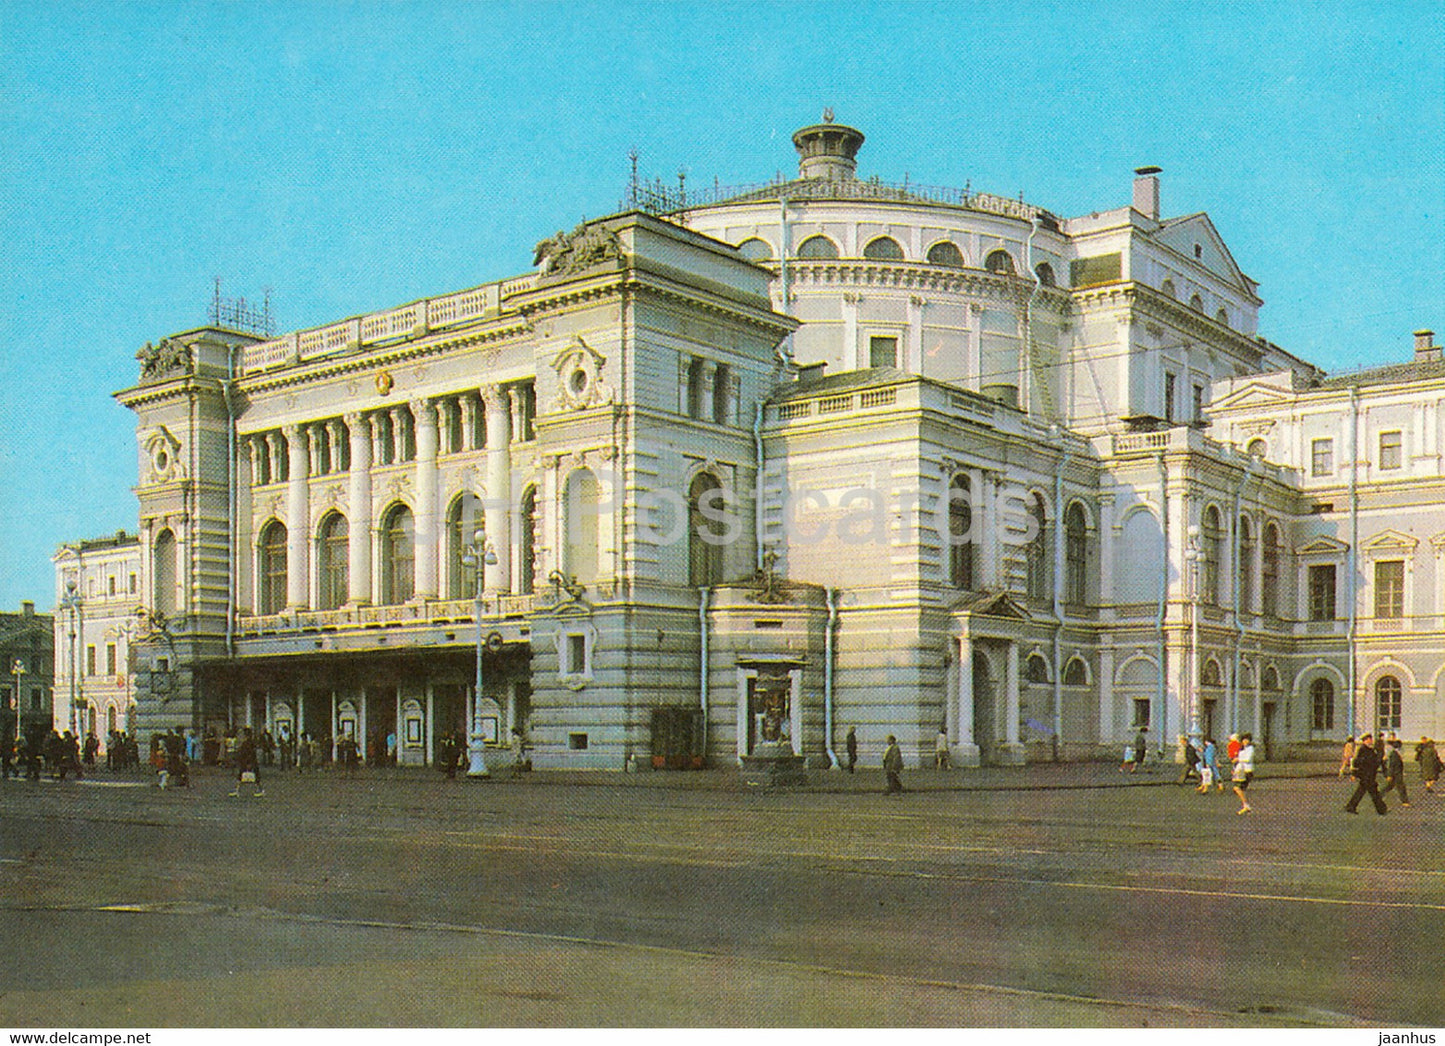 Leningrad - St Petersburg - Kirov Opera and Ballet Theatre - AVIA - postal stationery - 1982 - Russia USSR - unused - JH Postcards